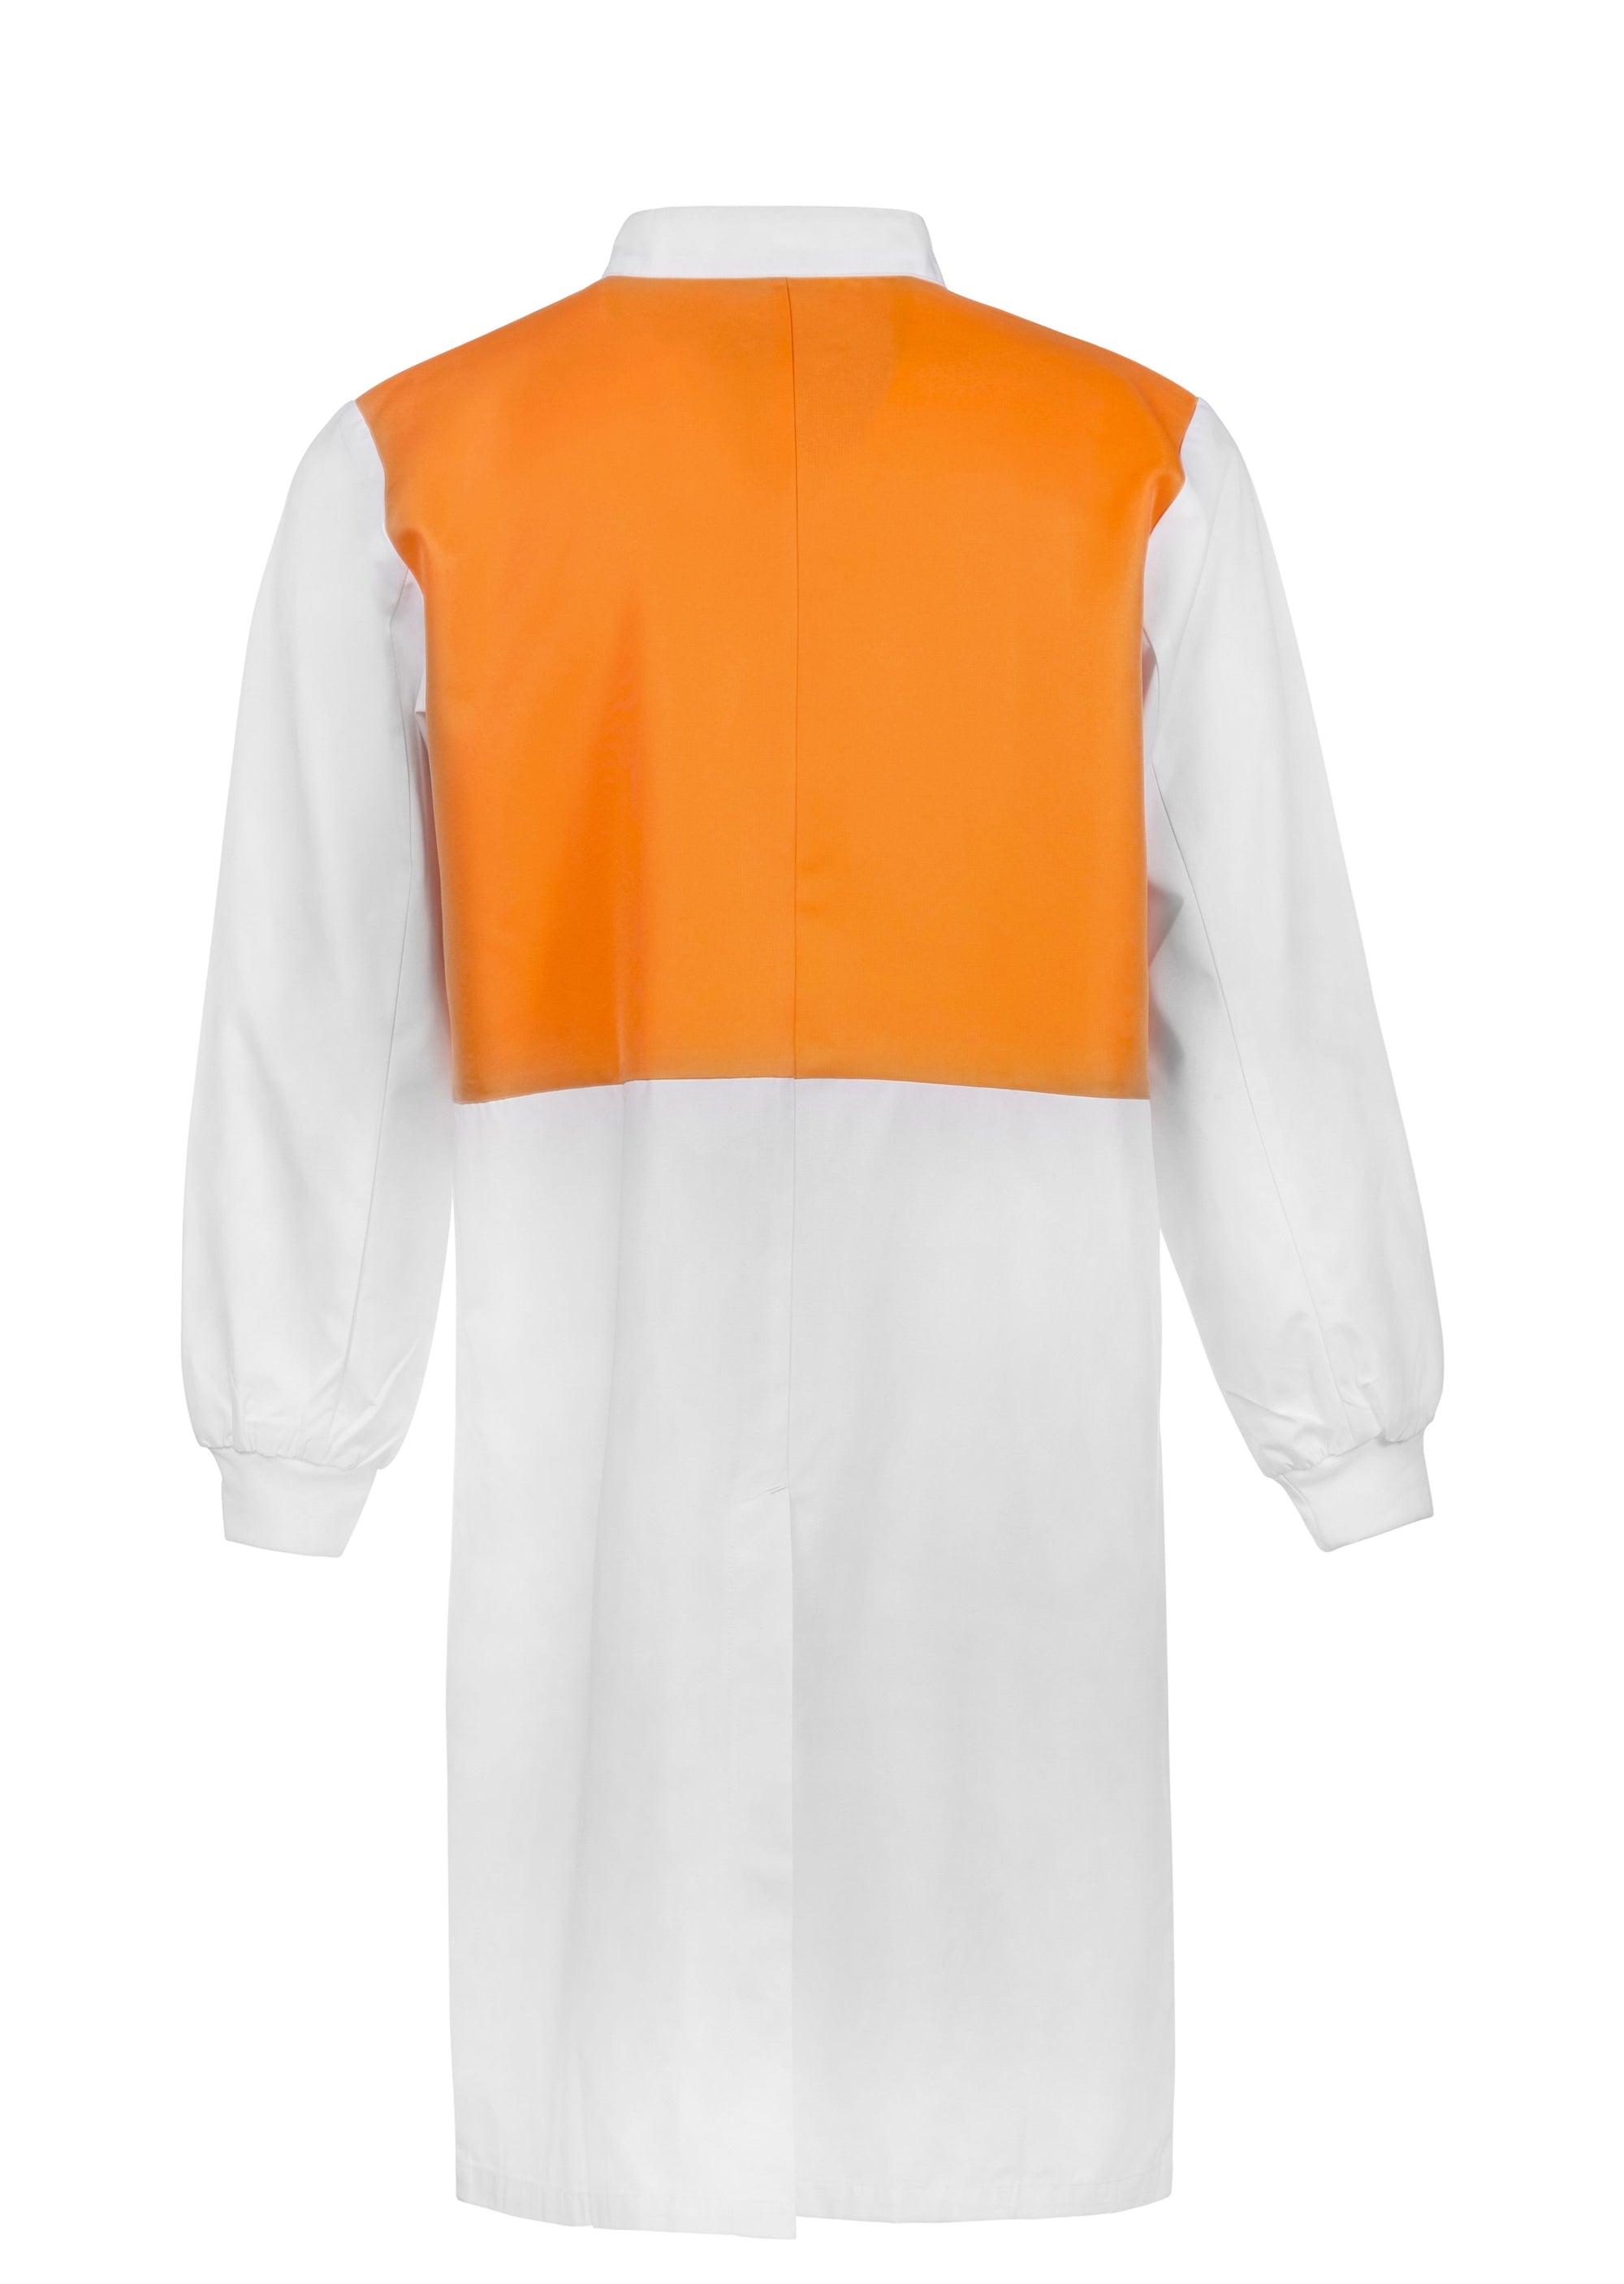 WorkCraft Mens Food Industry Orange/White Dustcoat with Mandarin Collar ls 180g L